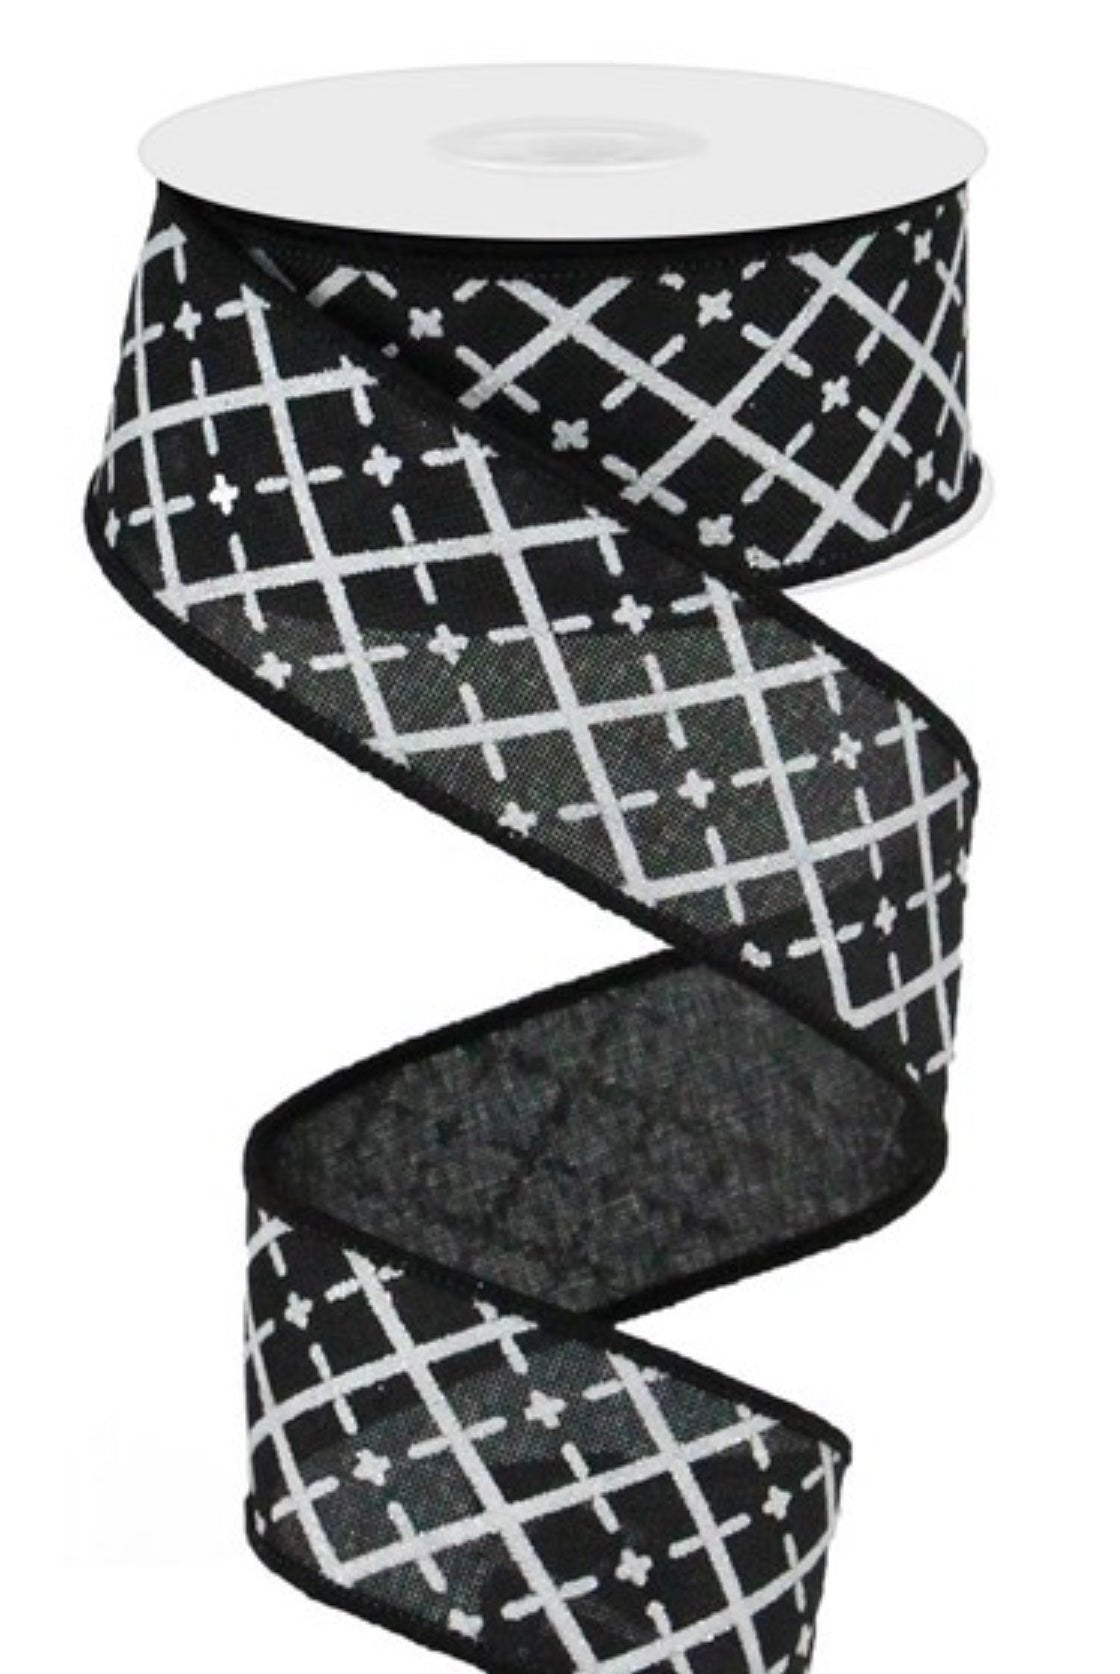 White and black argyle with glitter 1.5” - Greenery MarketWired ribbonRG0190102